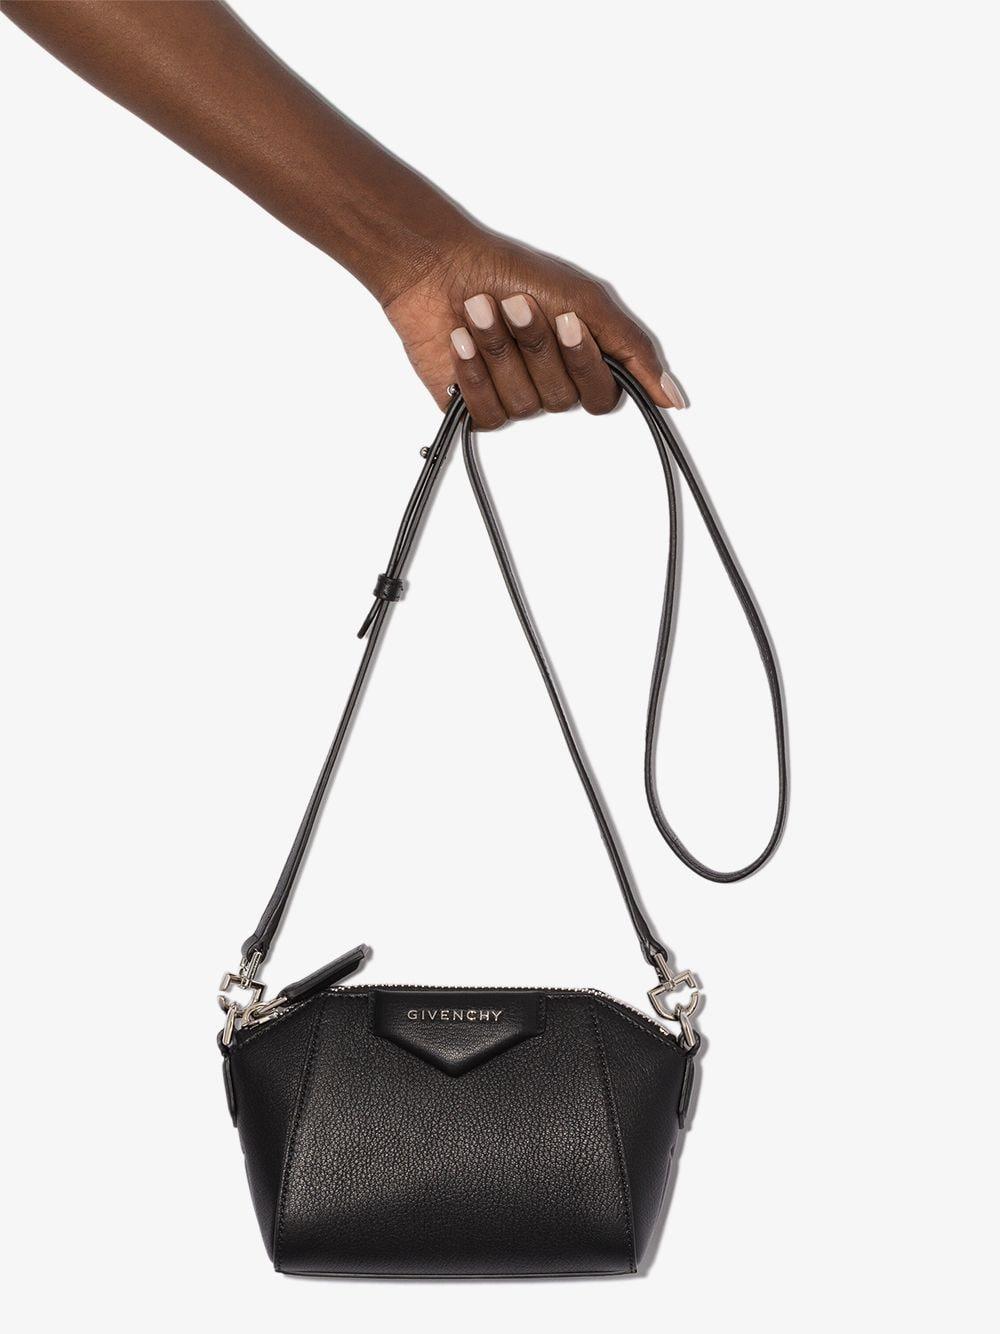 Givenchy Nano Antigona Mini Crossbody Leather Bag in Black | Lyst Australia